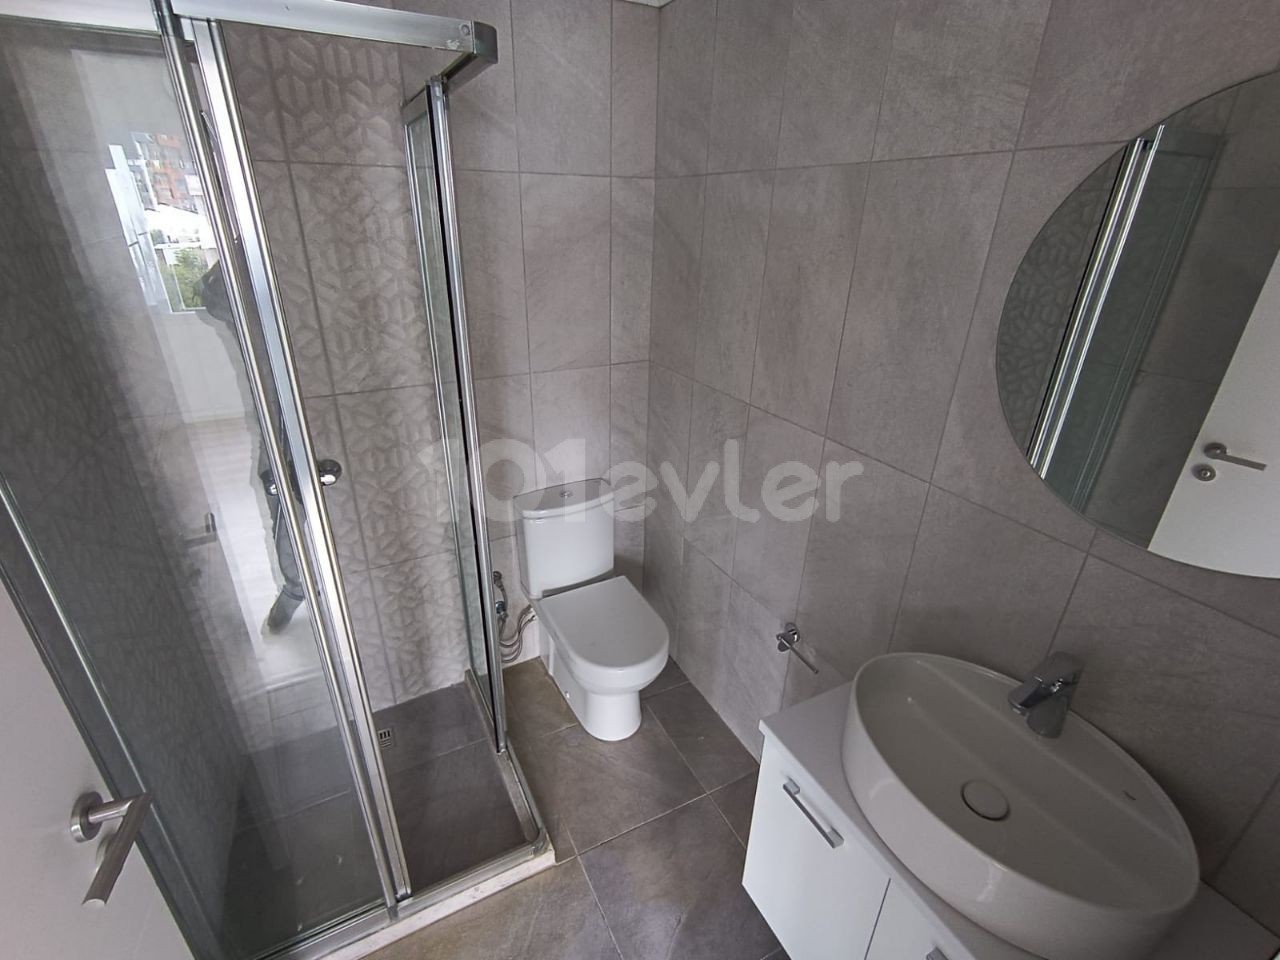 Ванная комната - 100м2 - 2+1 - в центре Кирении